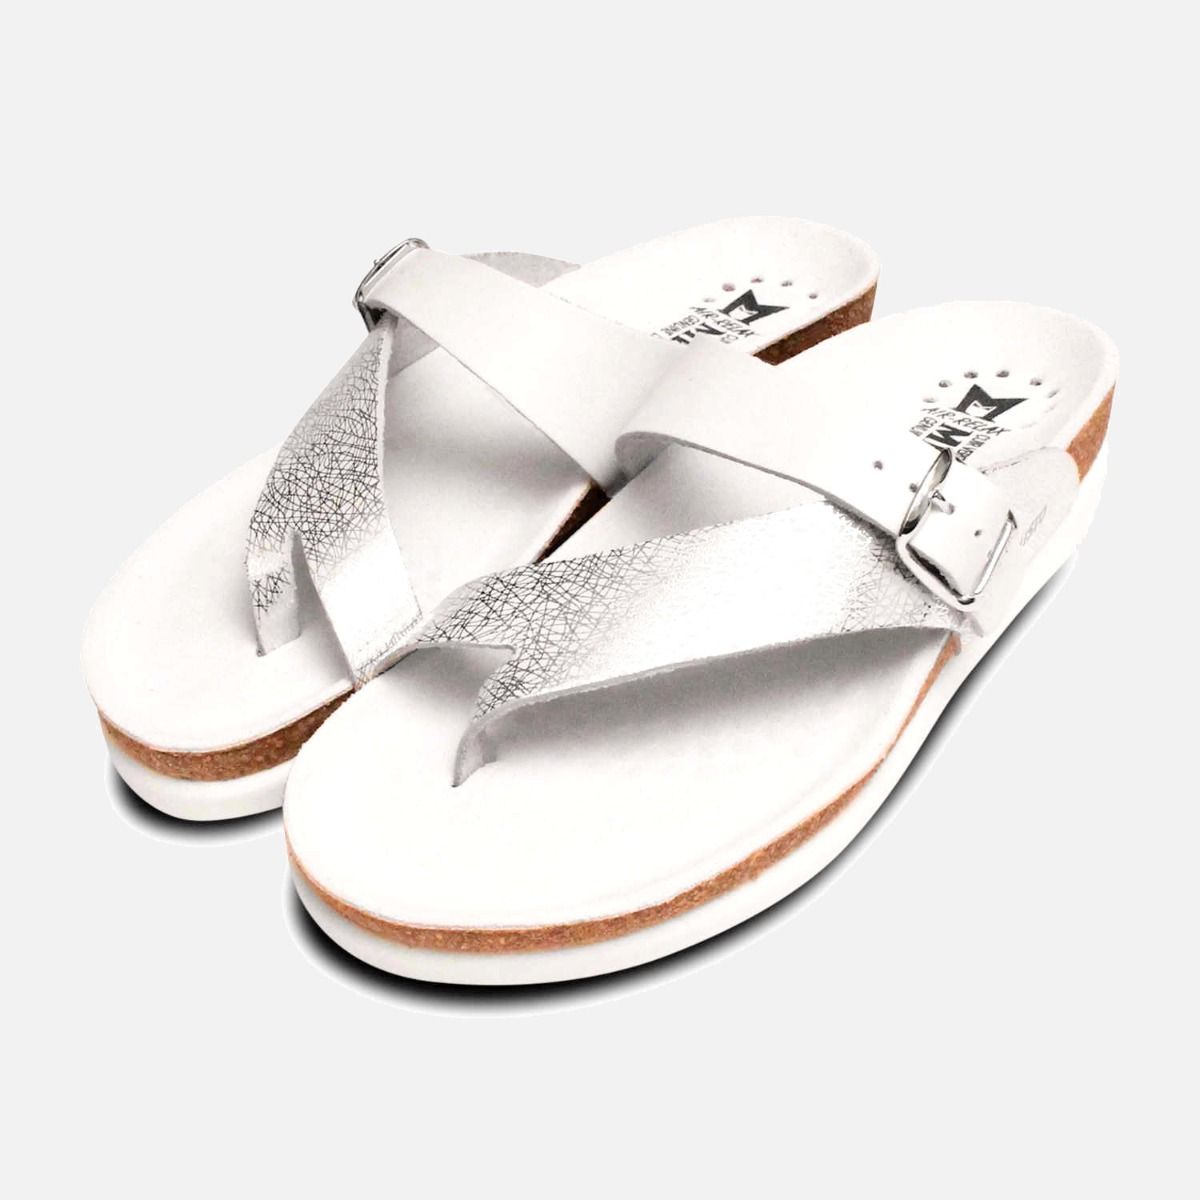 mephisto white helen sandals